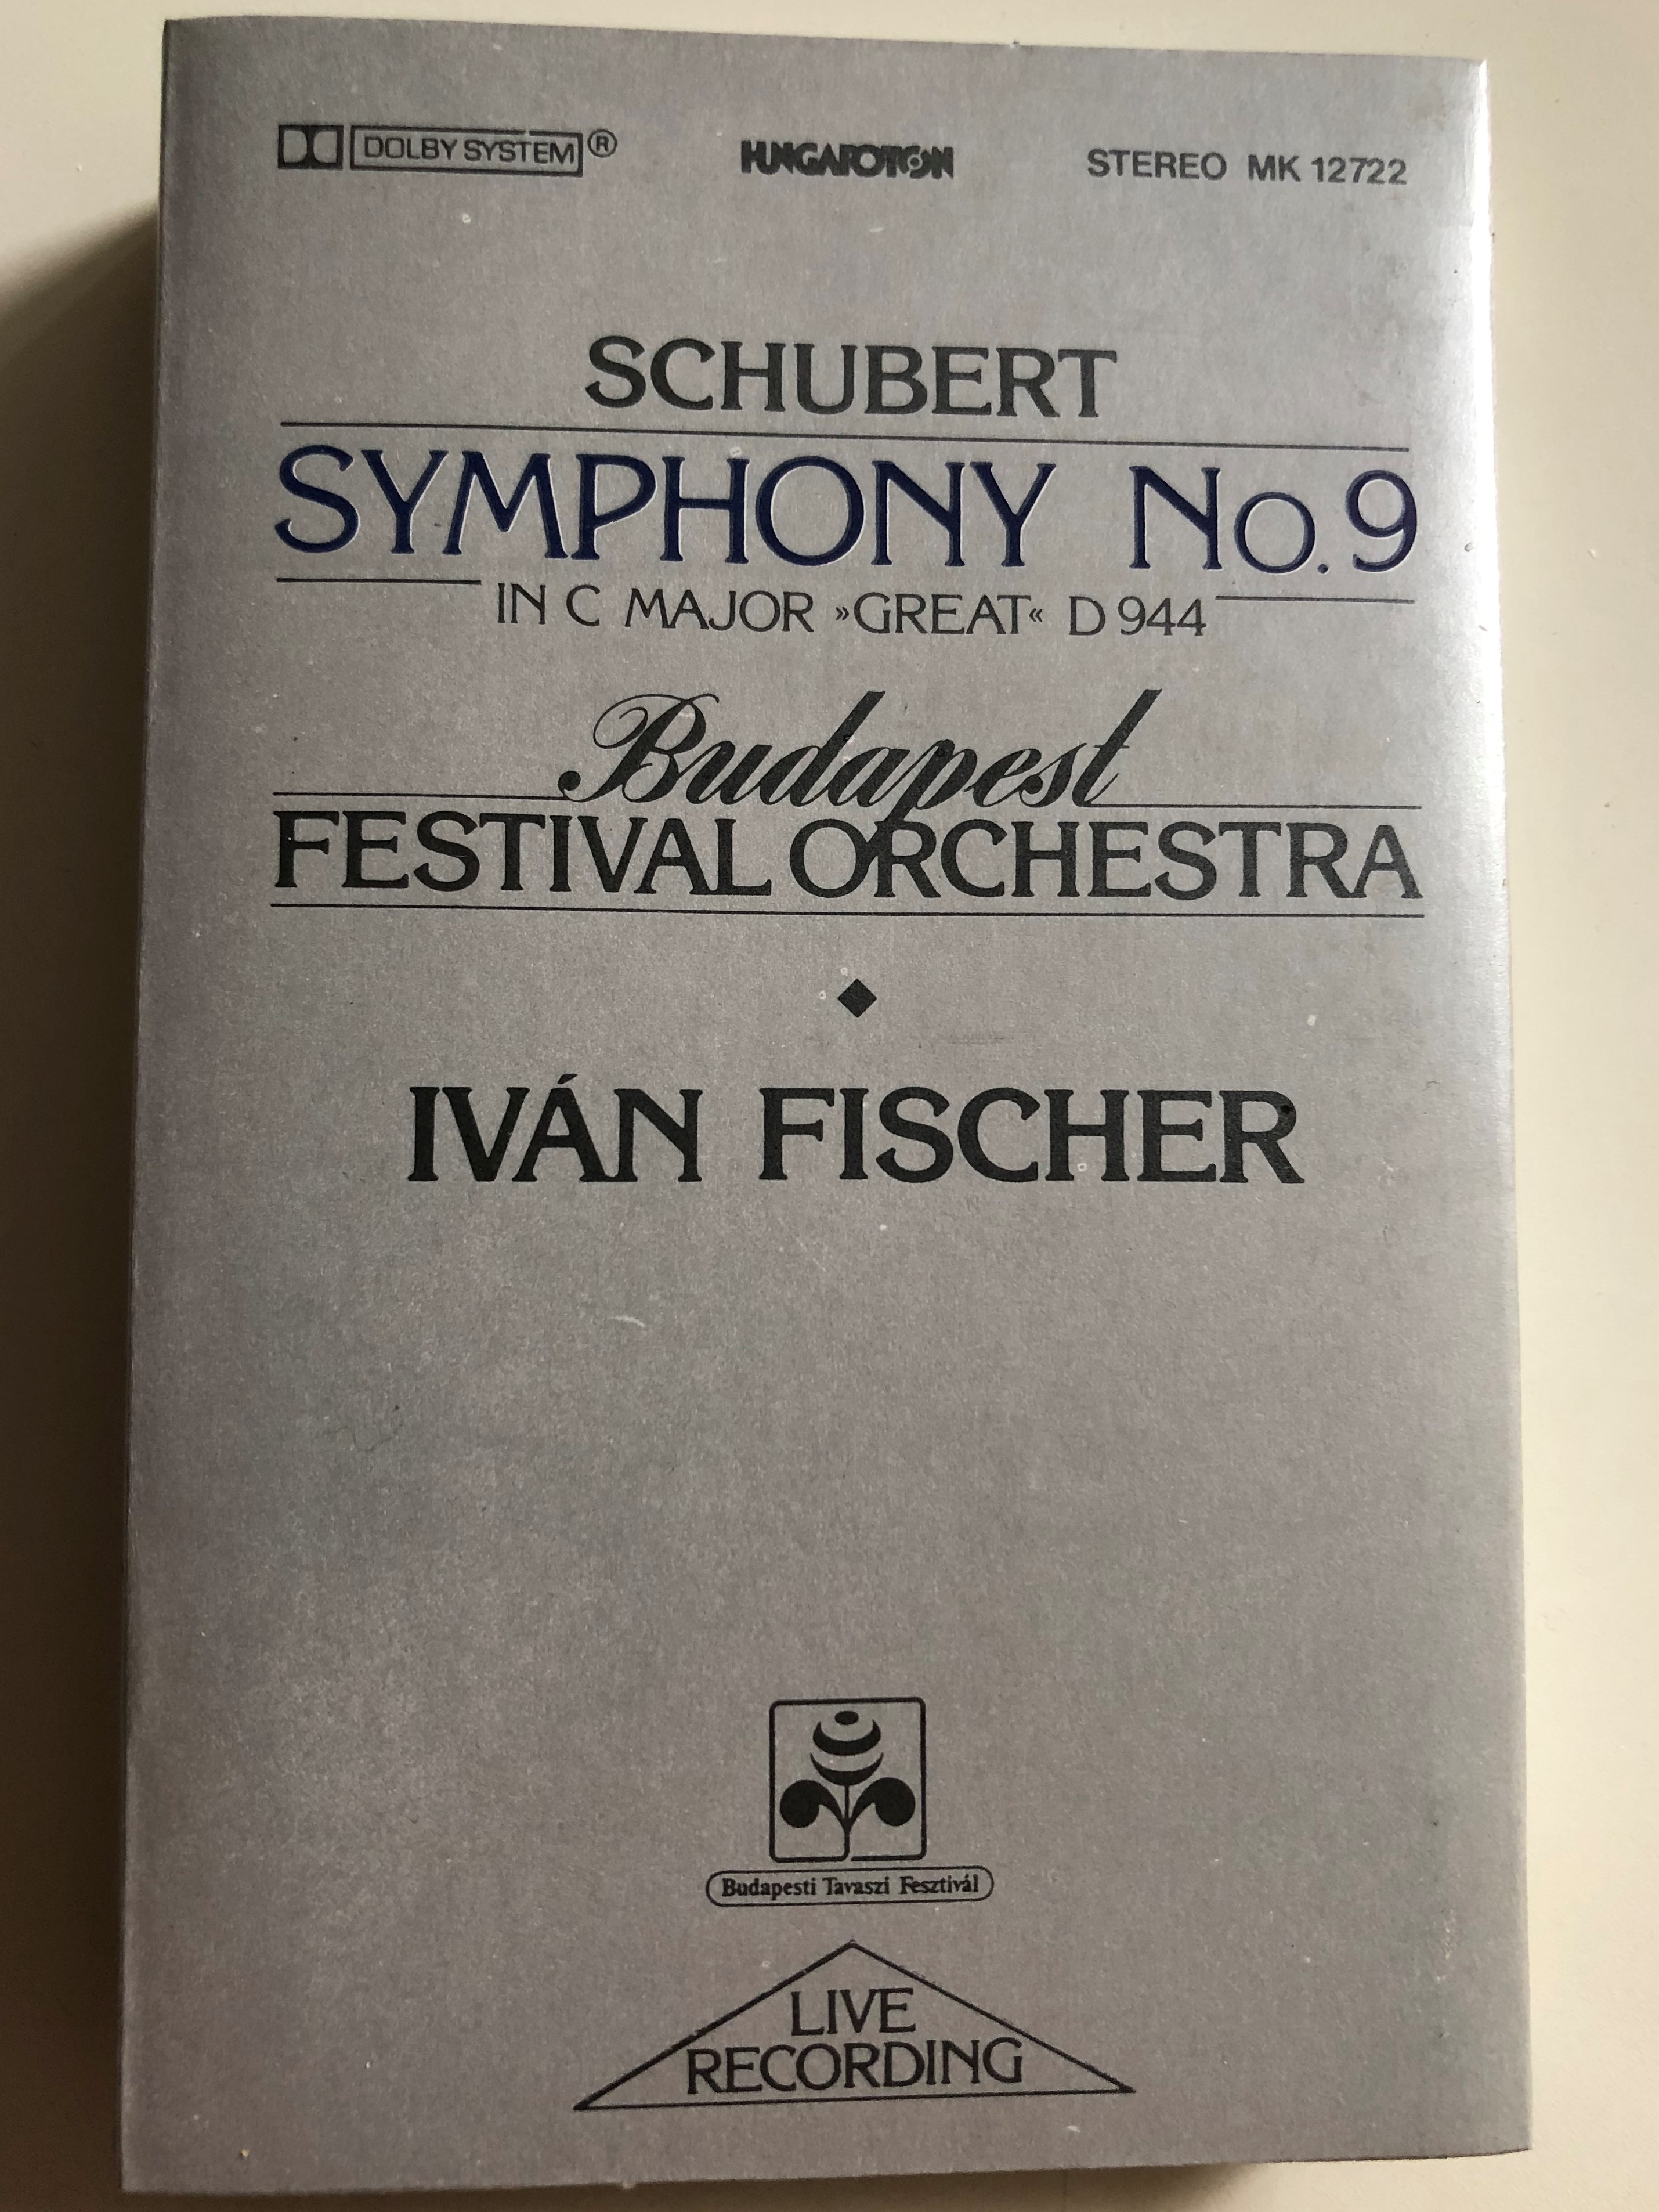 schubert-symphony-9-in-c-major-great-d.944-budapest-festival-orchestra-conducted-ivan-fischer-hungaroton-cassette-stereo-mk-12722-1-.jpg